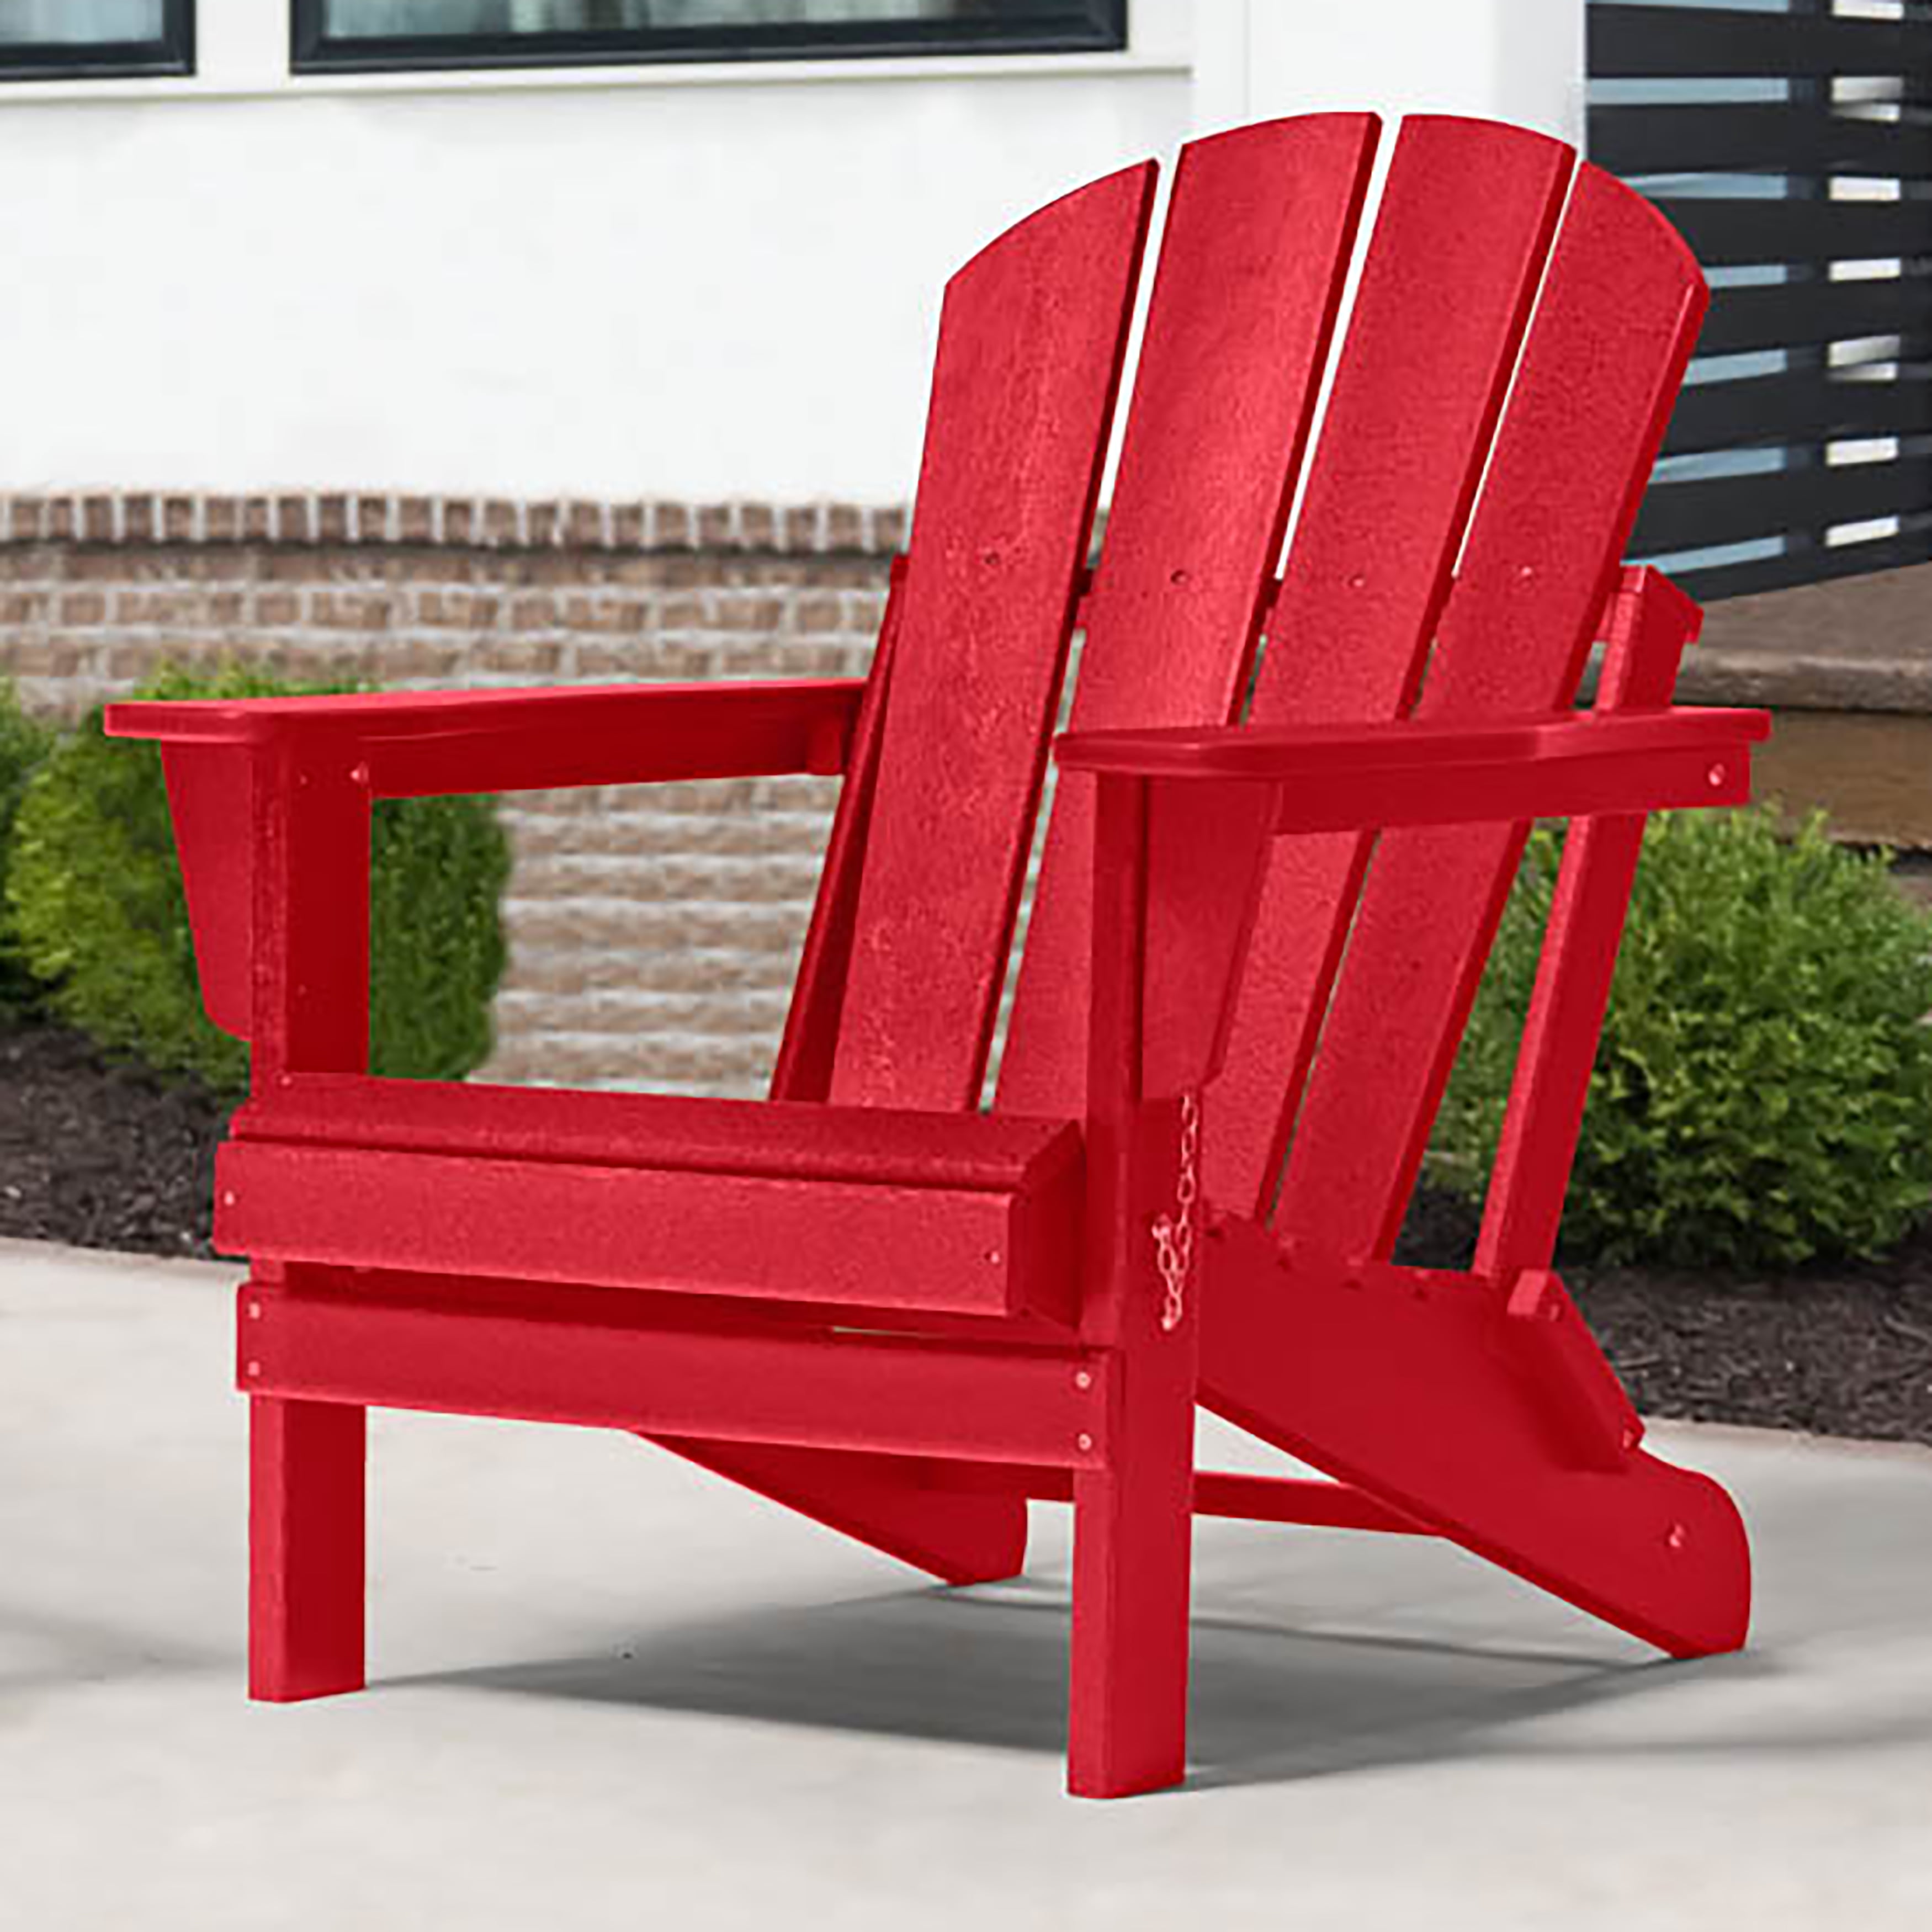 Braxton Folding Plastic Adirondack Chair, Red - Walmart.com